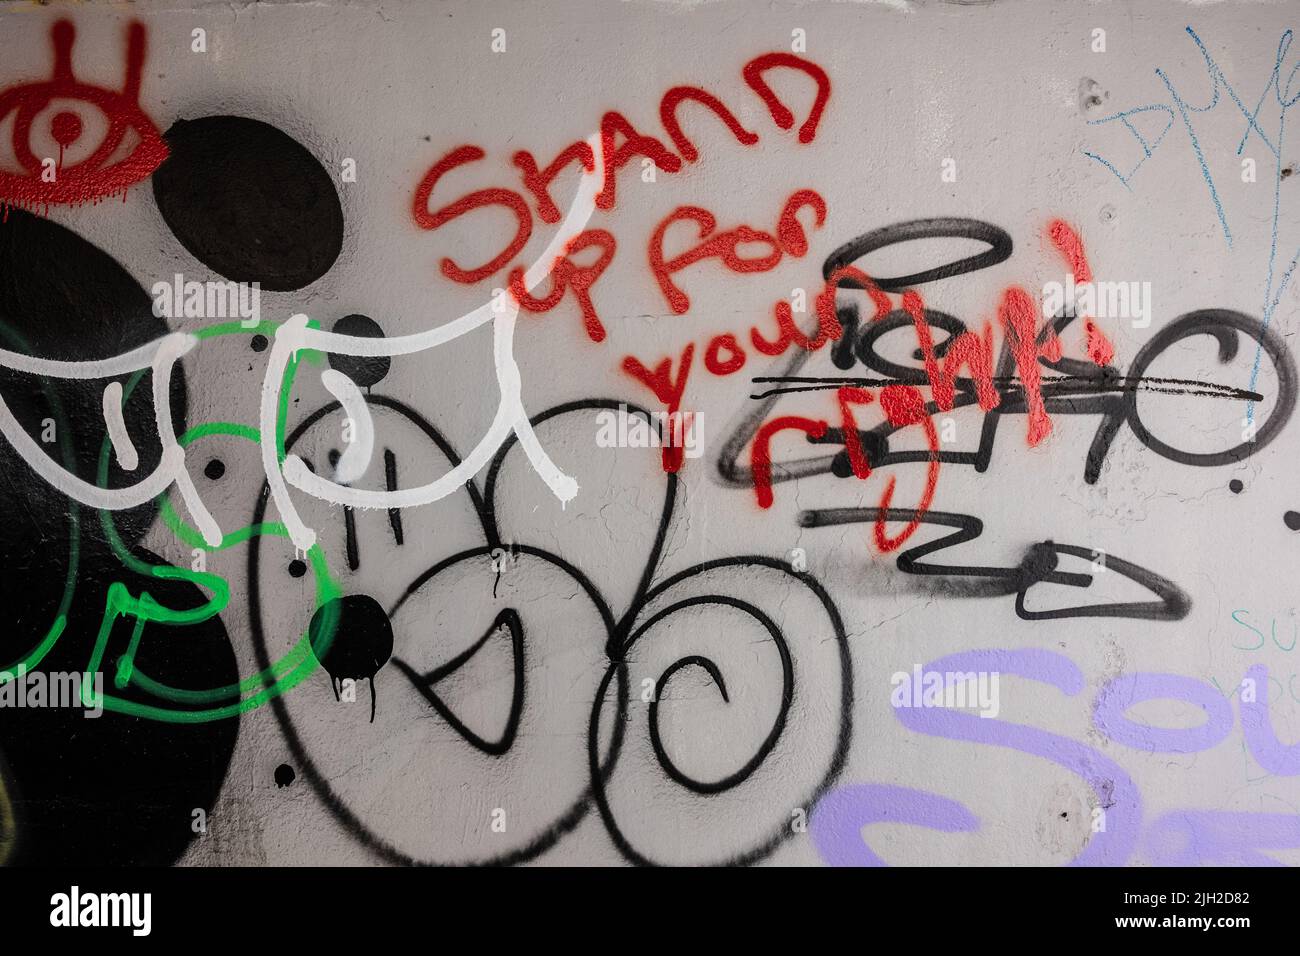 Graffiti writing on a subway in Cardiff, Wales, UK Stock Photo